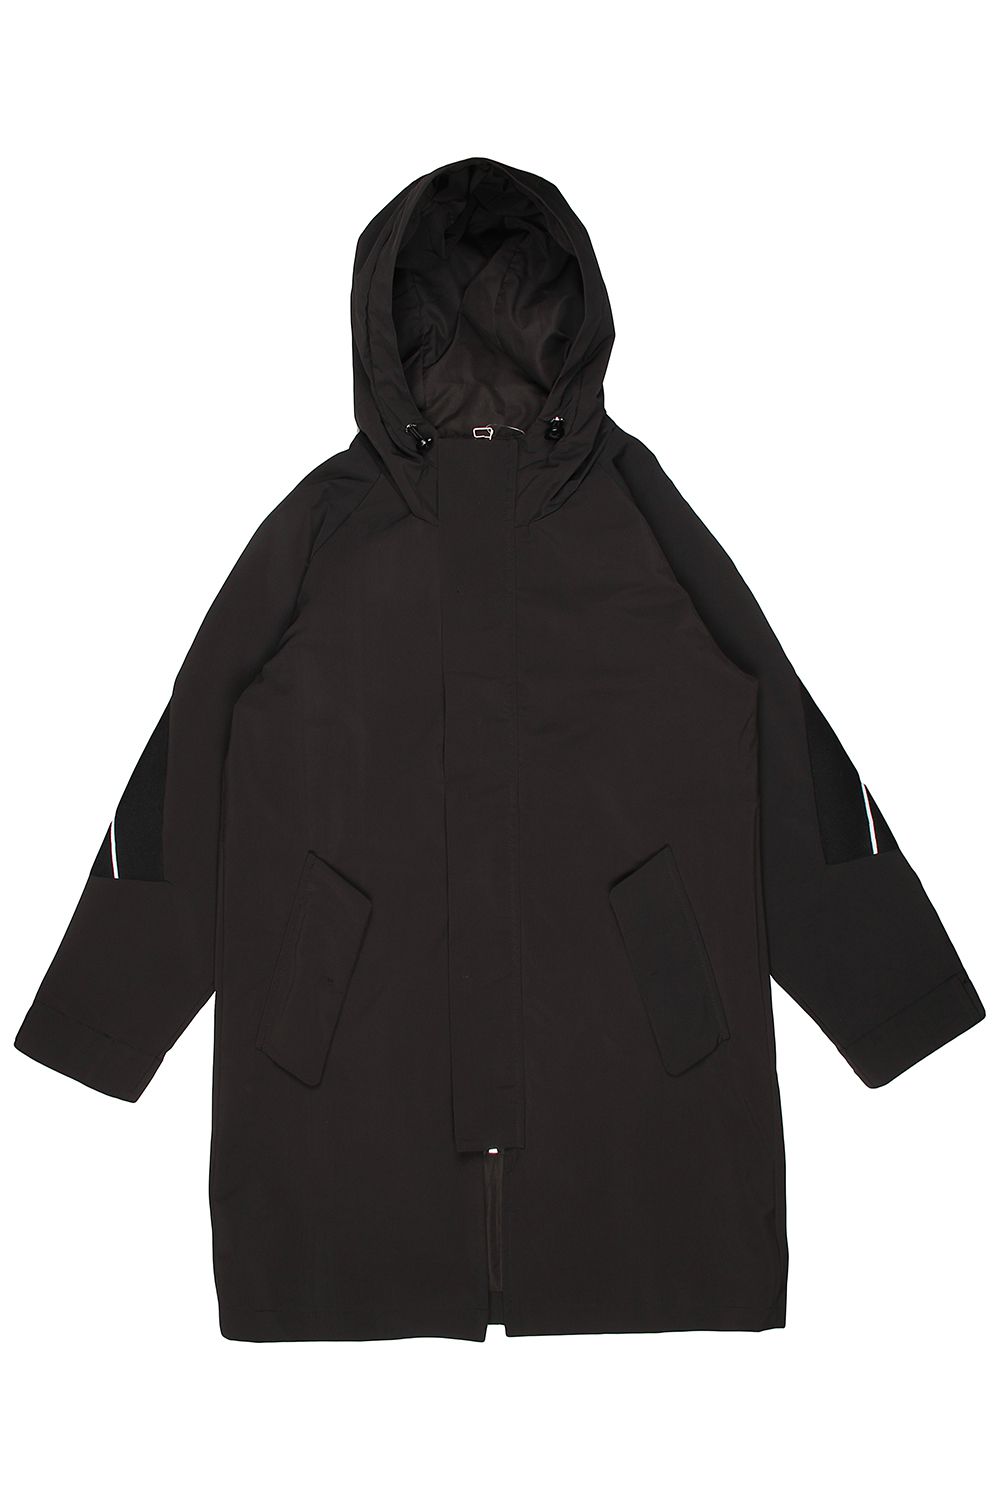 Куртка Noble People, размер 128, цвет черный 18607-518 - фото 2